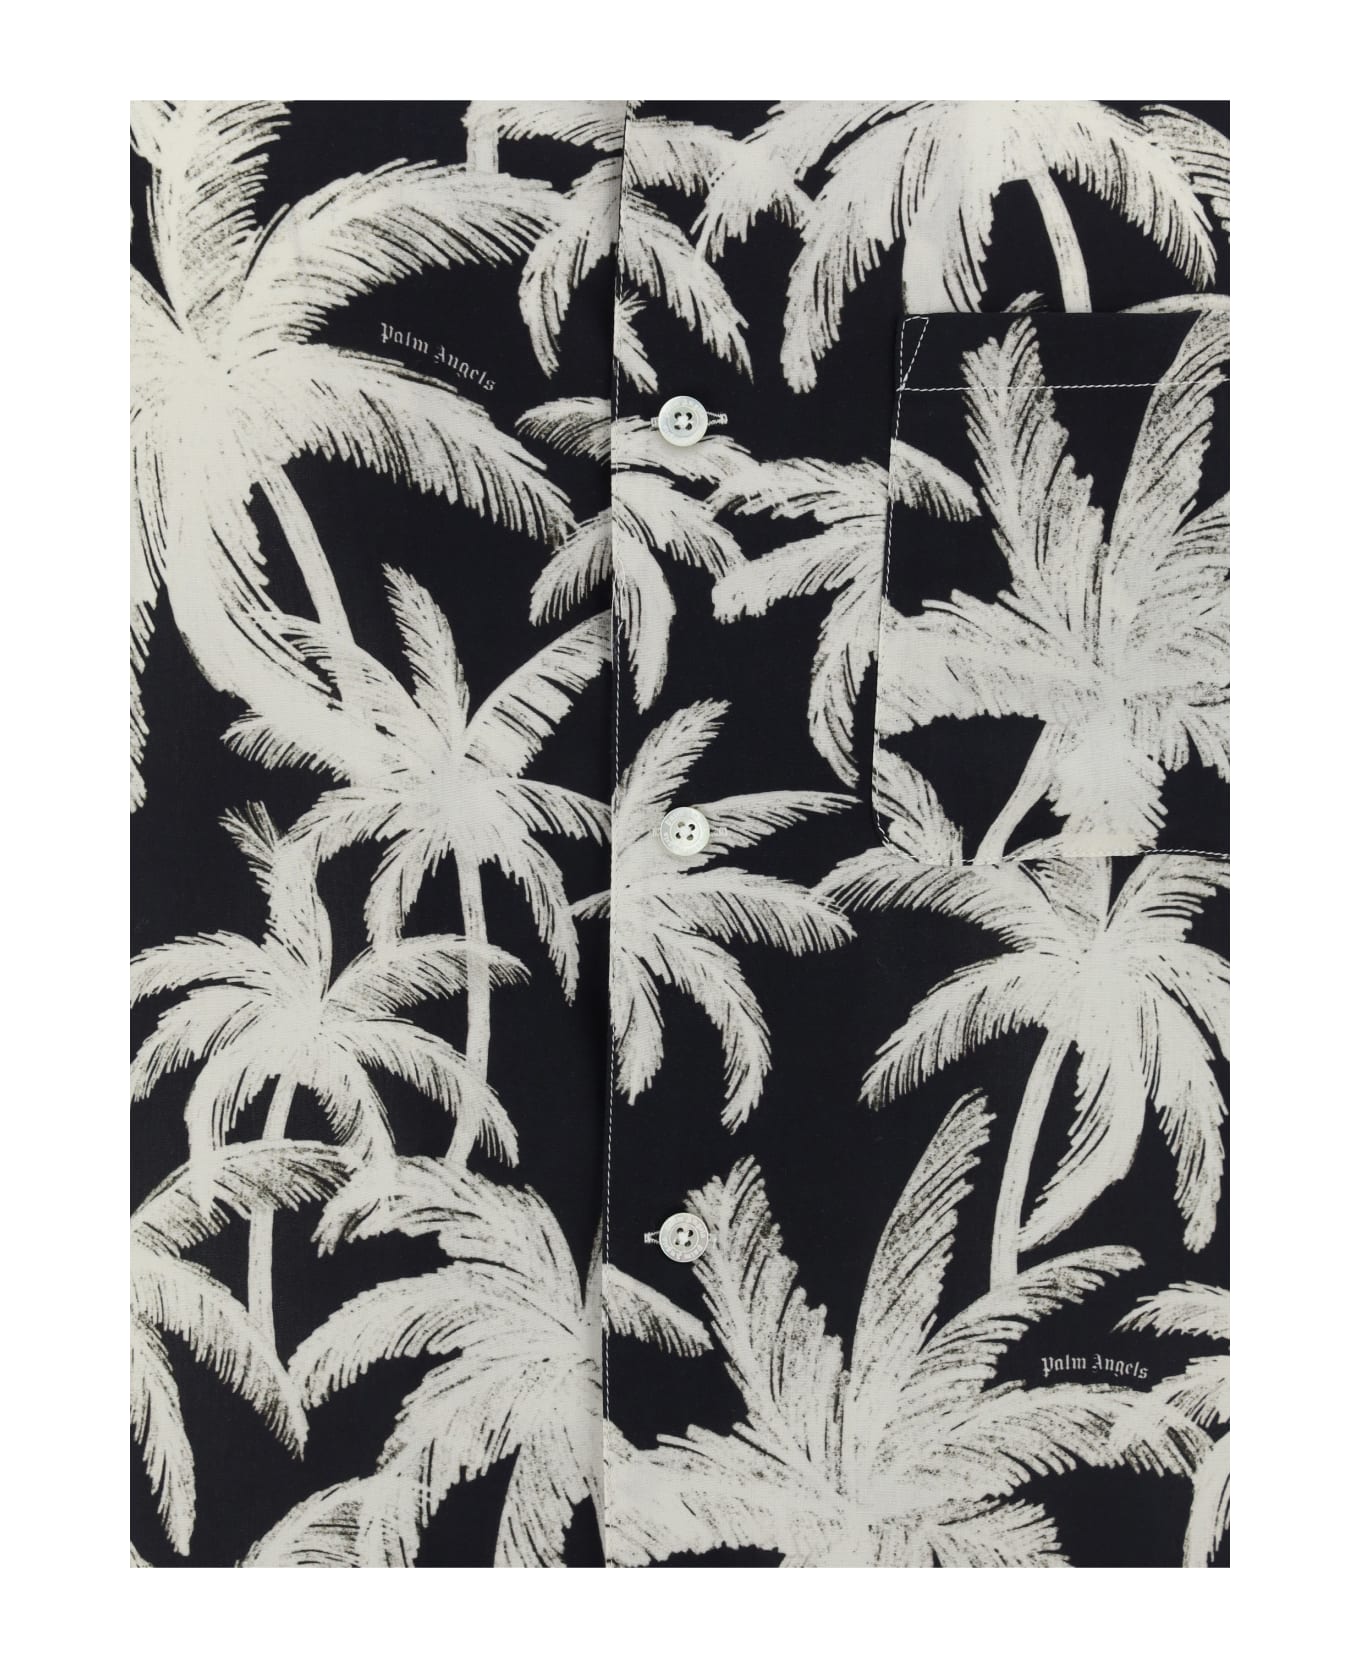 Palm Angels Palm Print Shirt - Black Off White